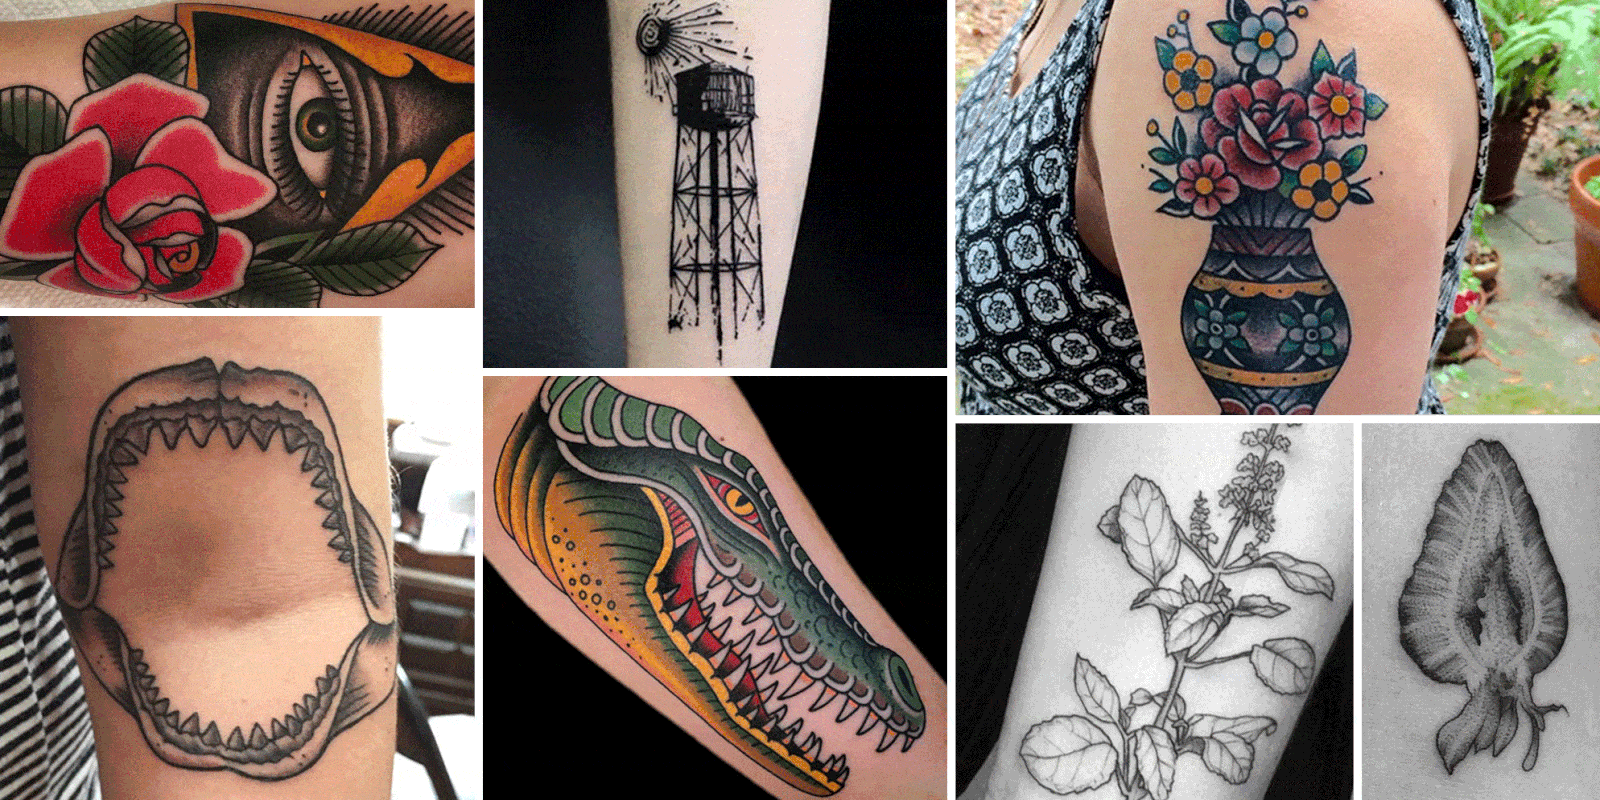 Signs of Improper Tattoo Healing